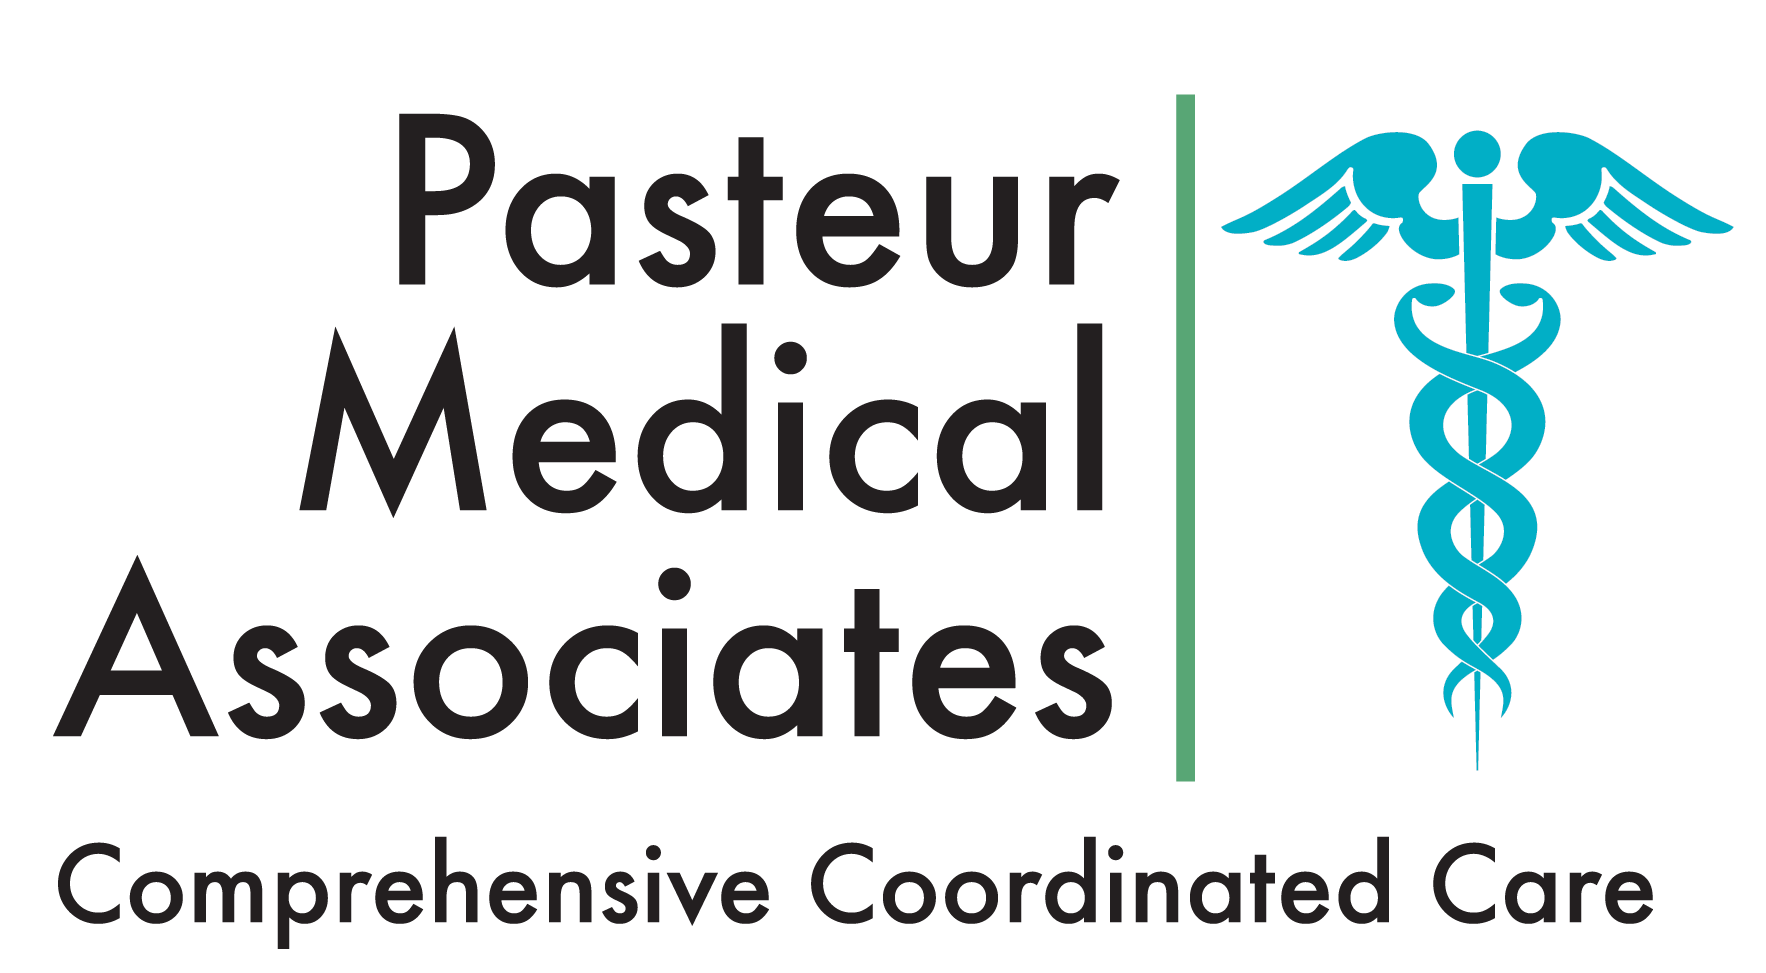 Pasteur Medical Associates